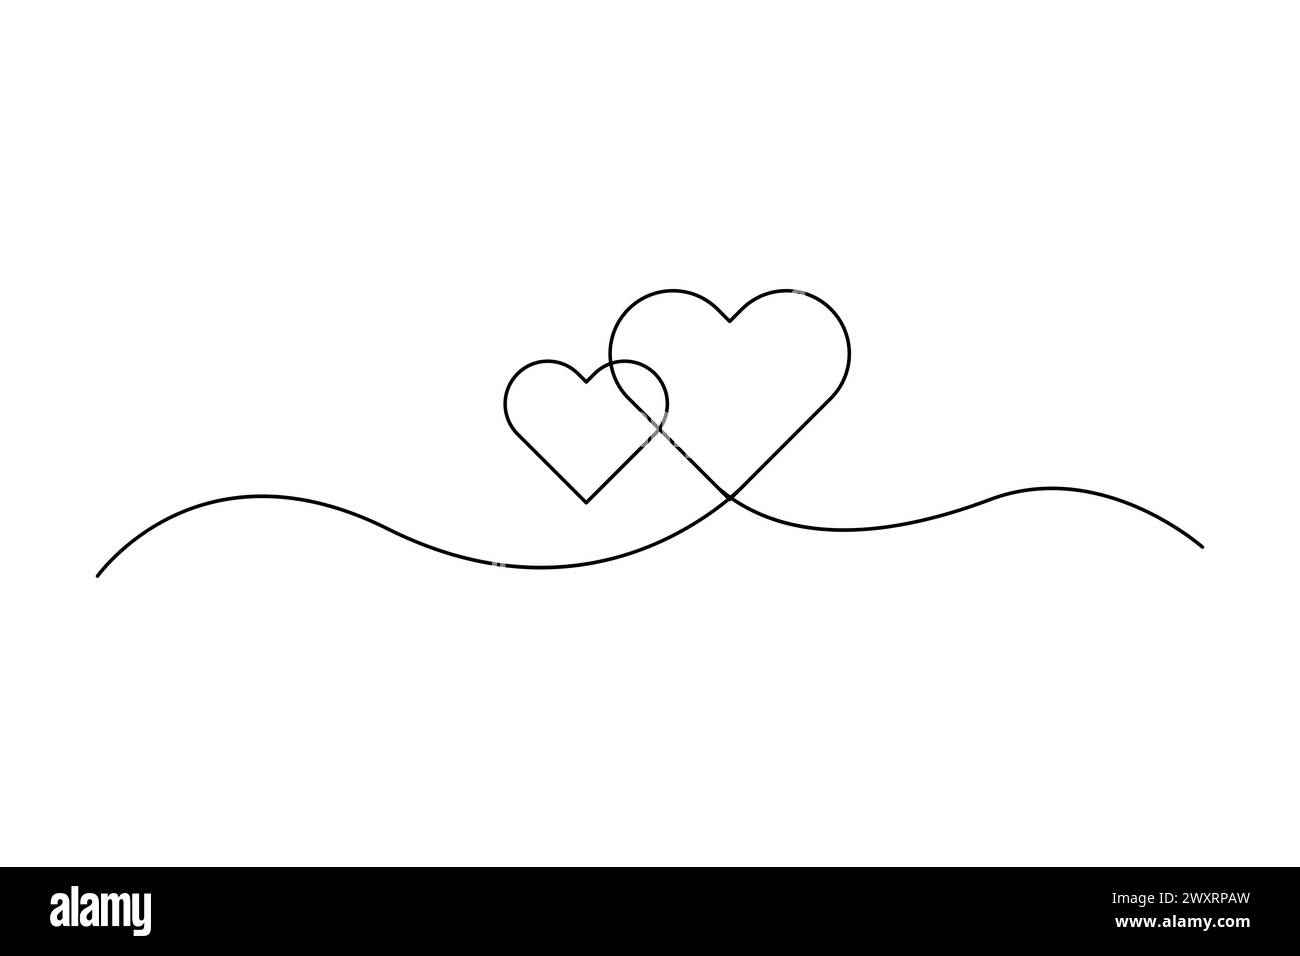 Interlocking hearts line art. Continuous line drawing. Love symbol. Minimalist design. Vector illustration. EPS 10. Stock Vector